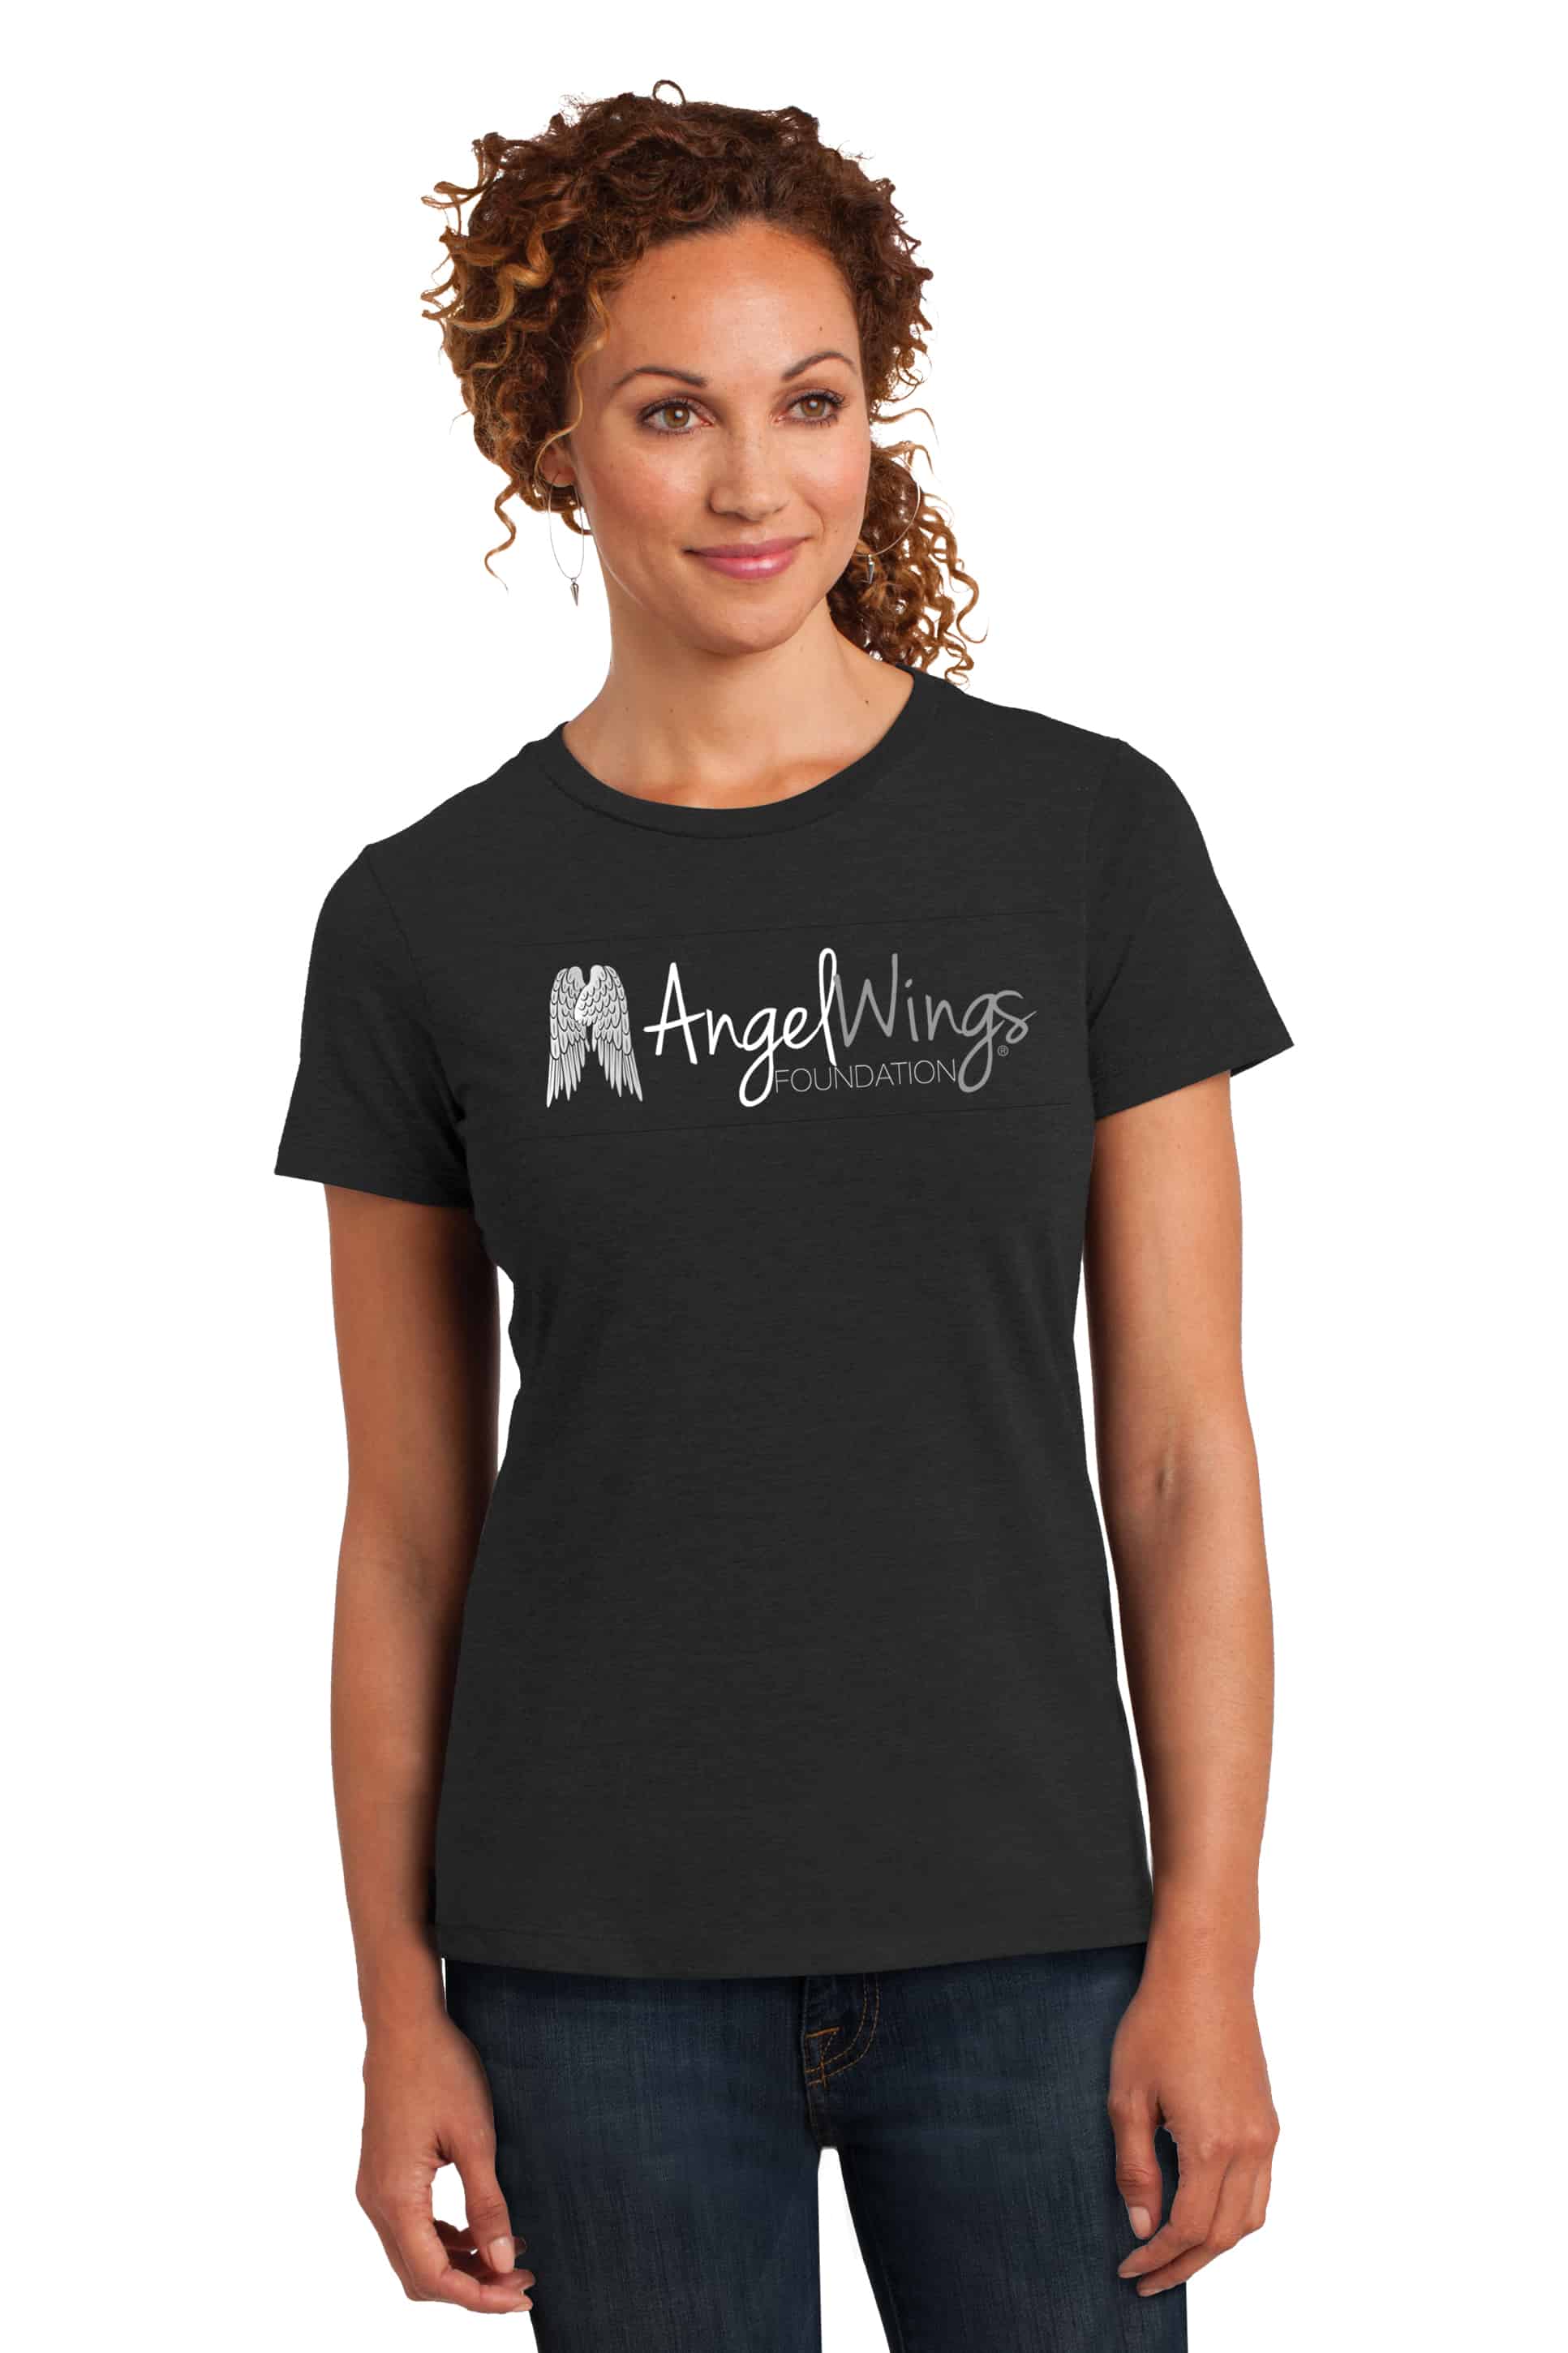 angel wing t shirt women's